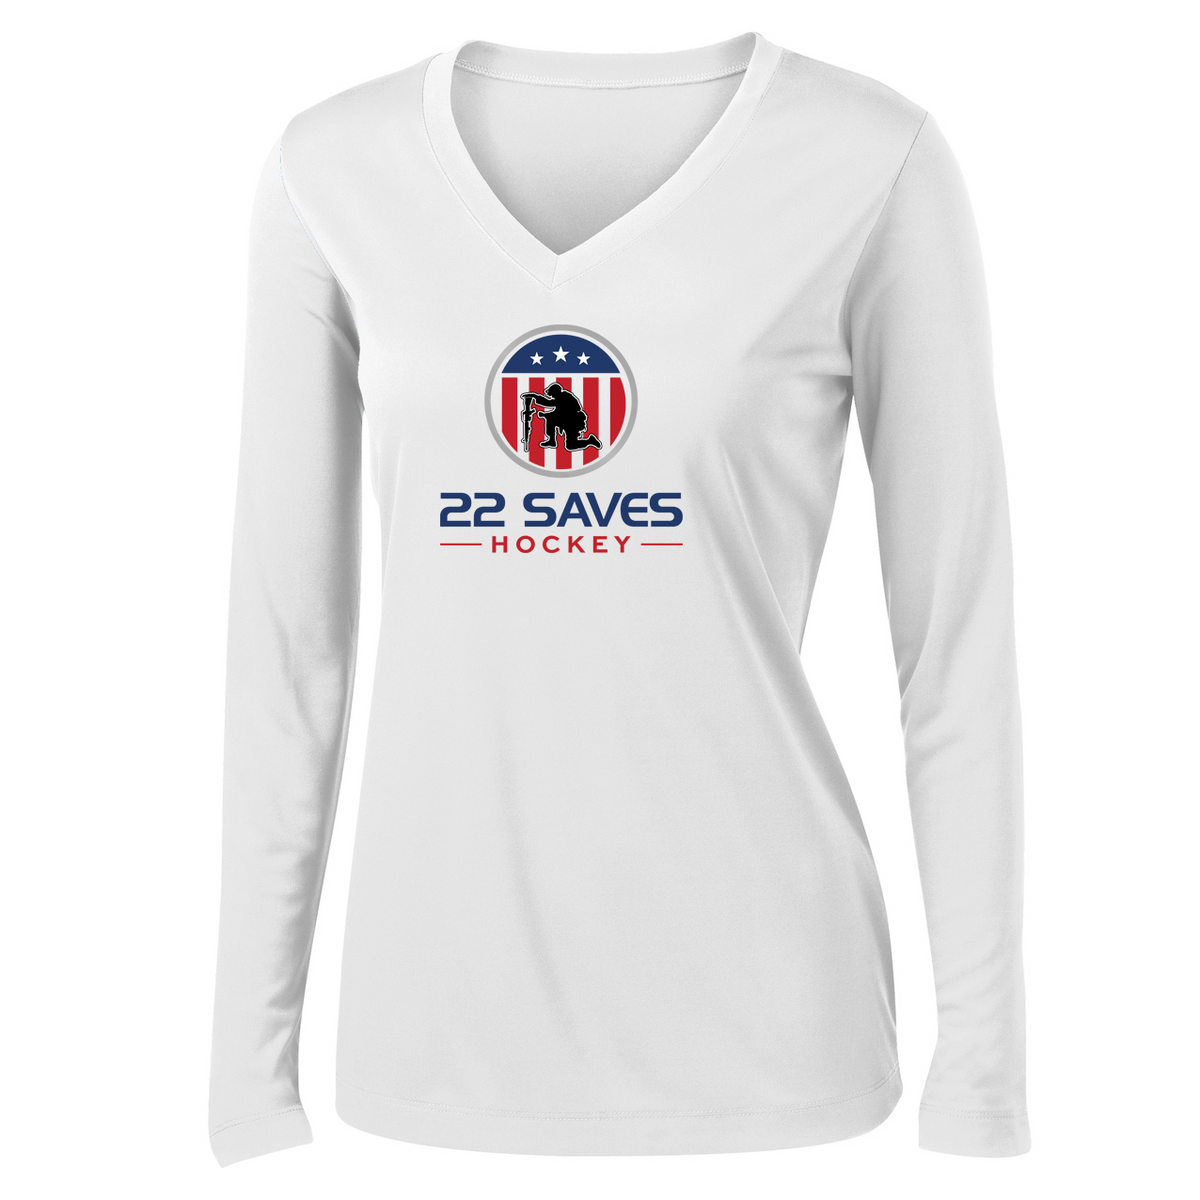 22 Saves Hockey Women's Long Sleeve Performance Shirt